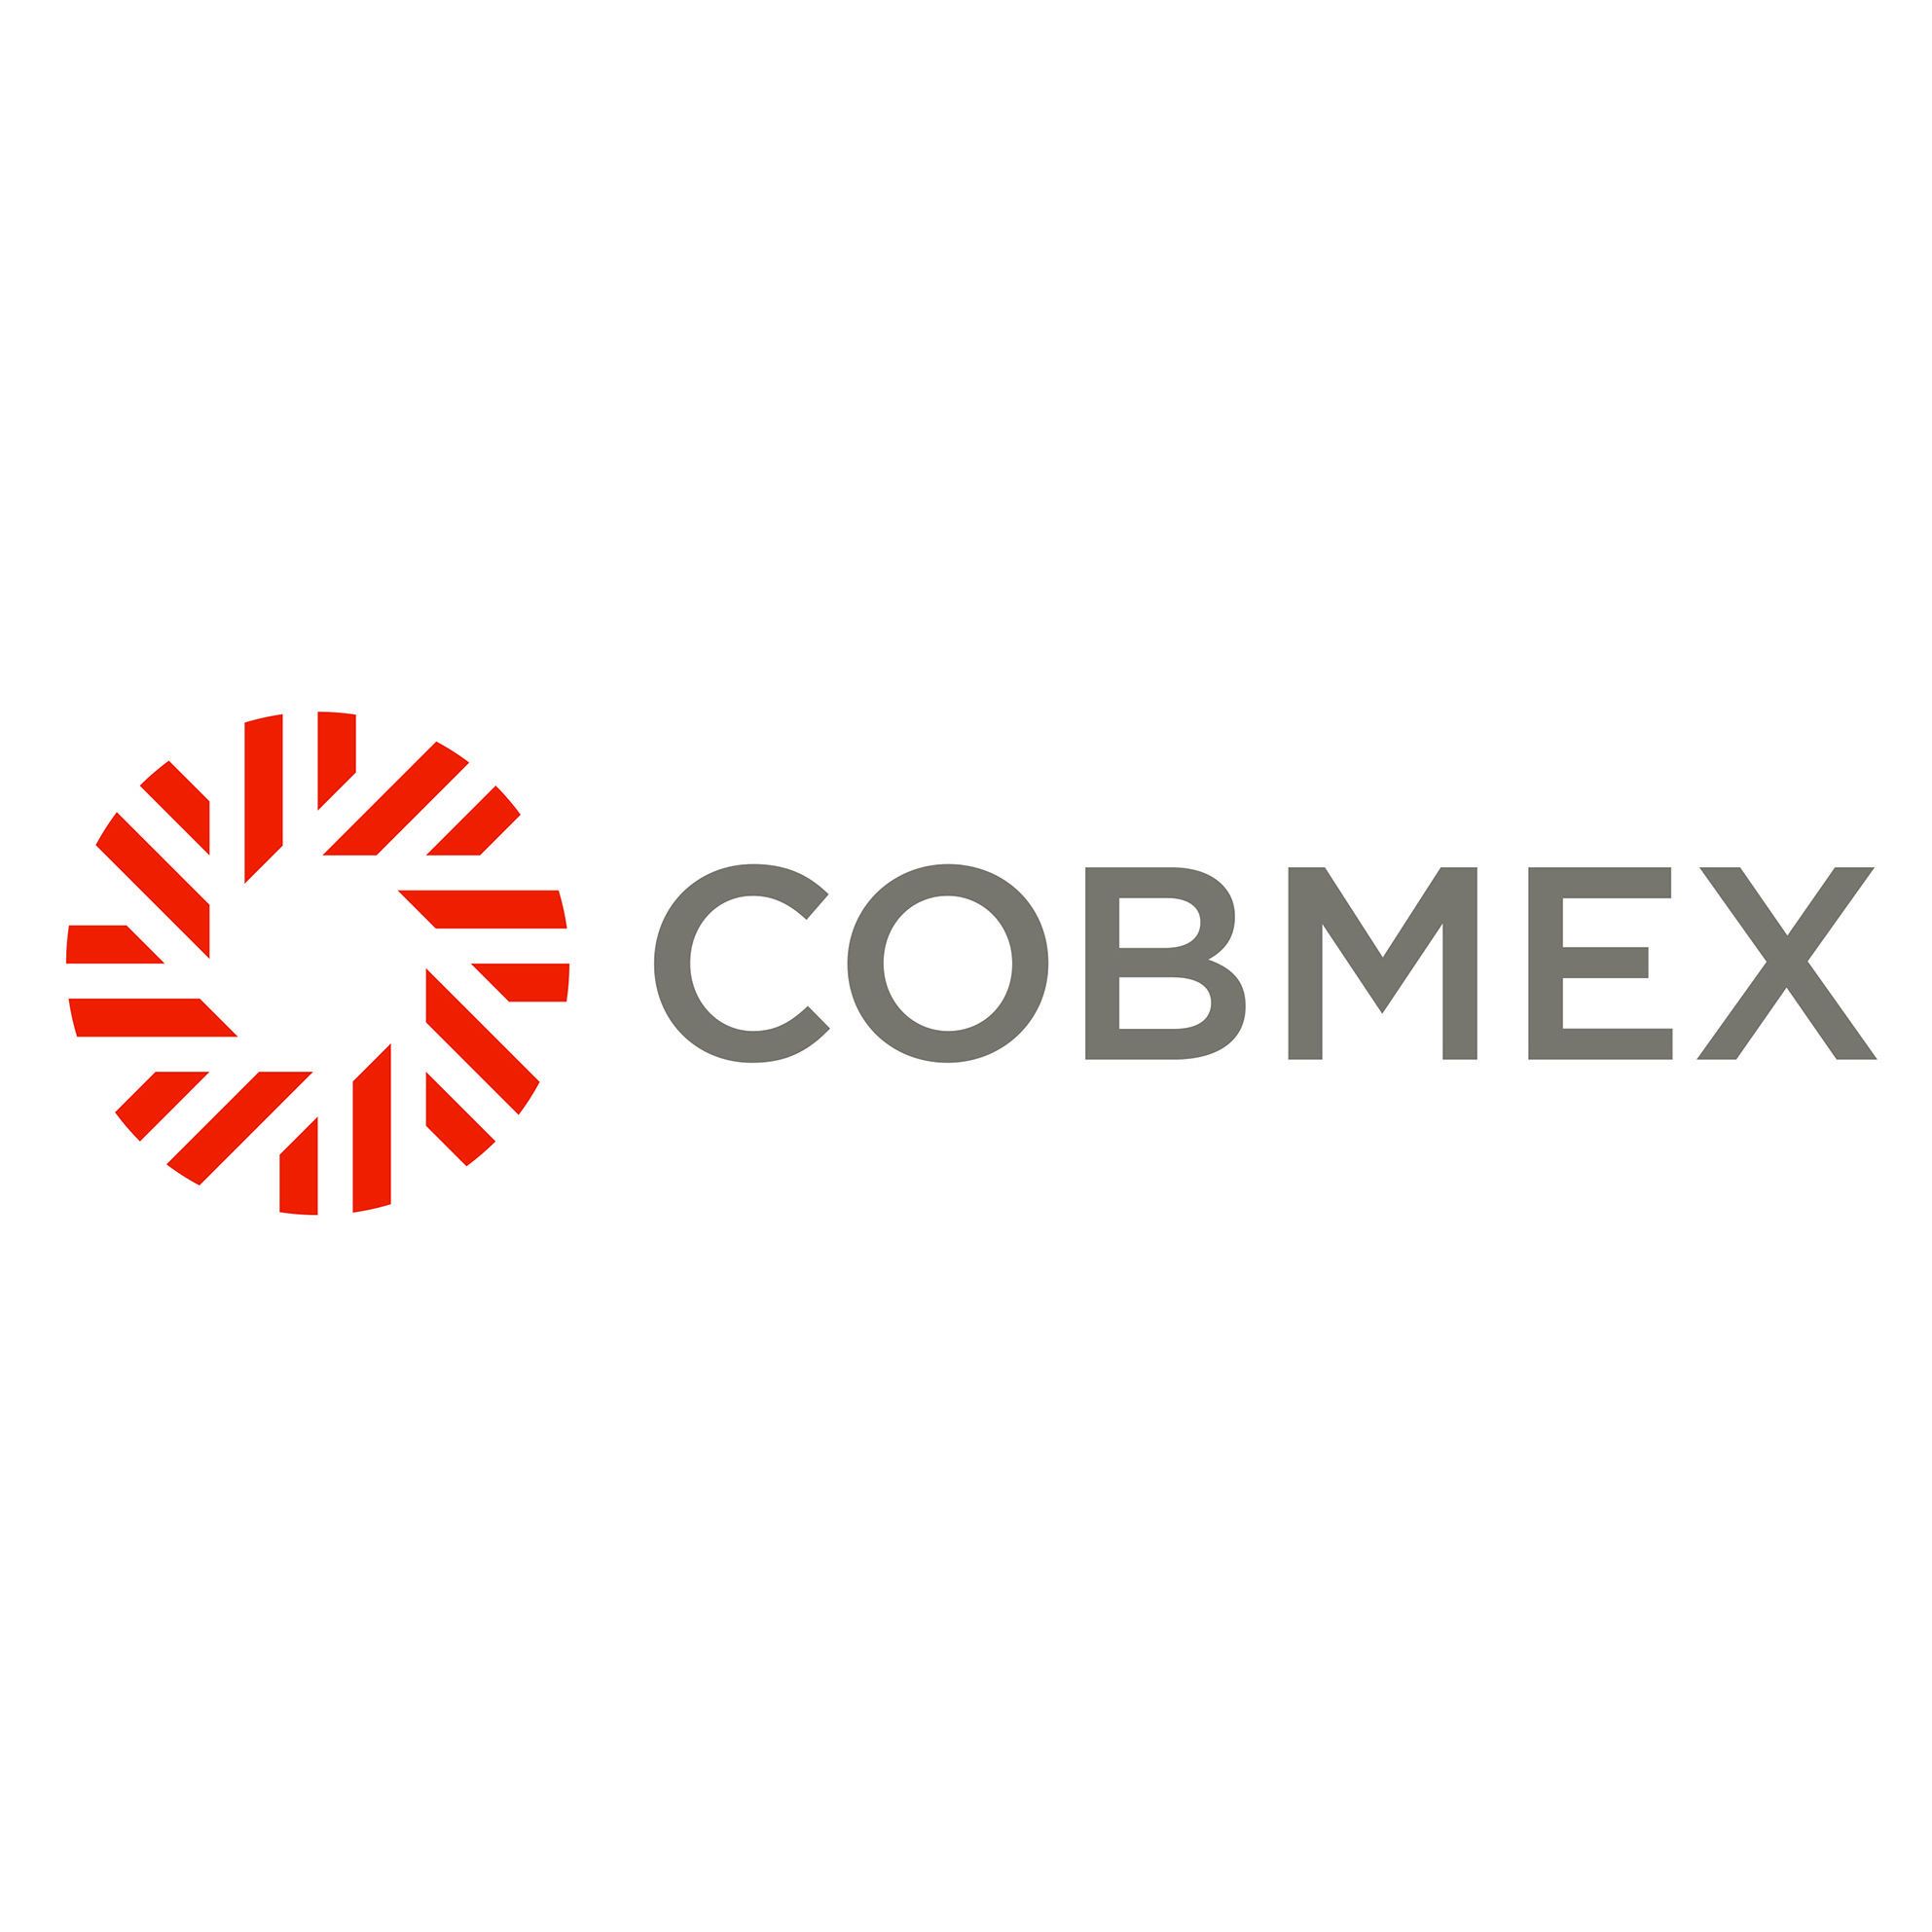 Cobmex